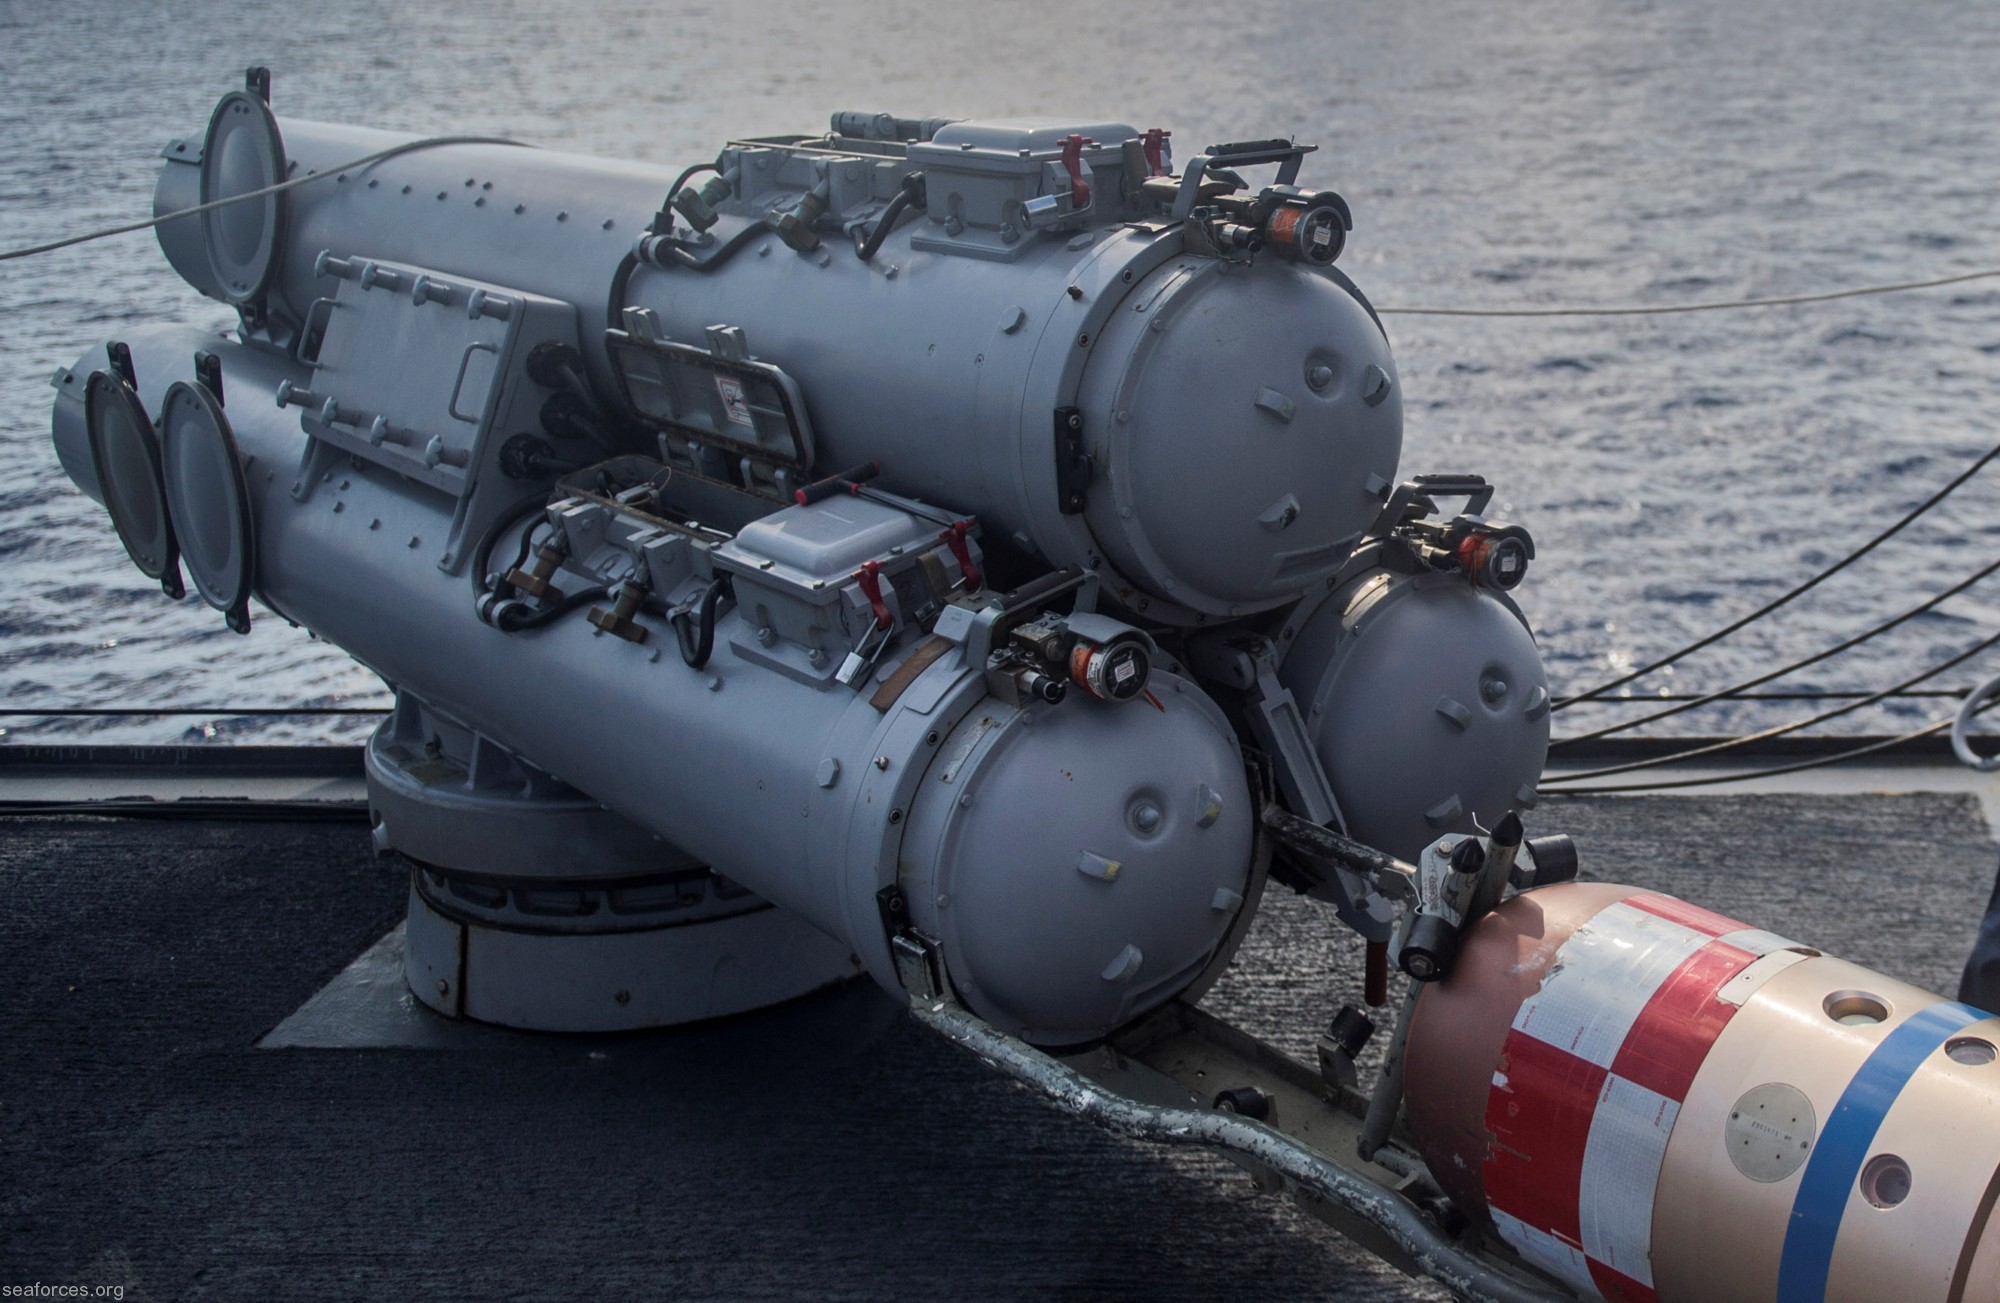 ddg-52 uss barry guided missile destroyer us navy 35 mk-32 triple torpedo tubes svtt